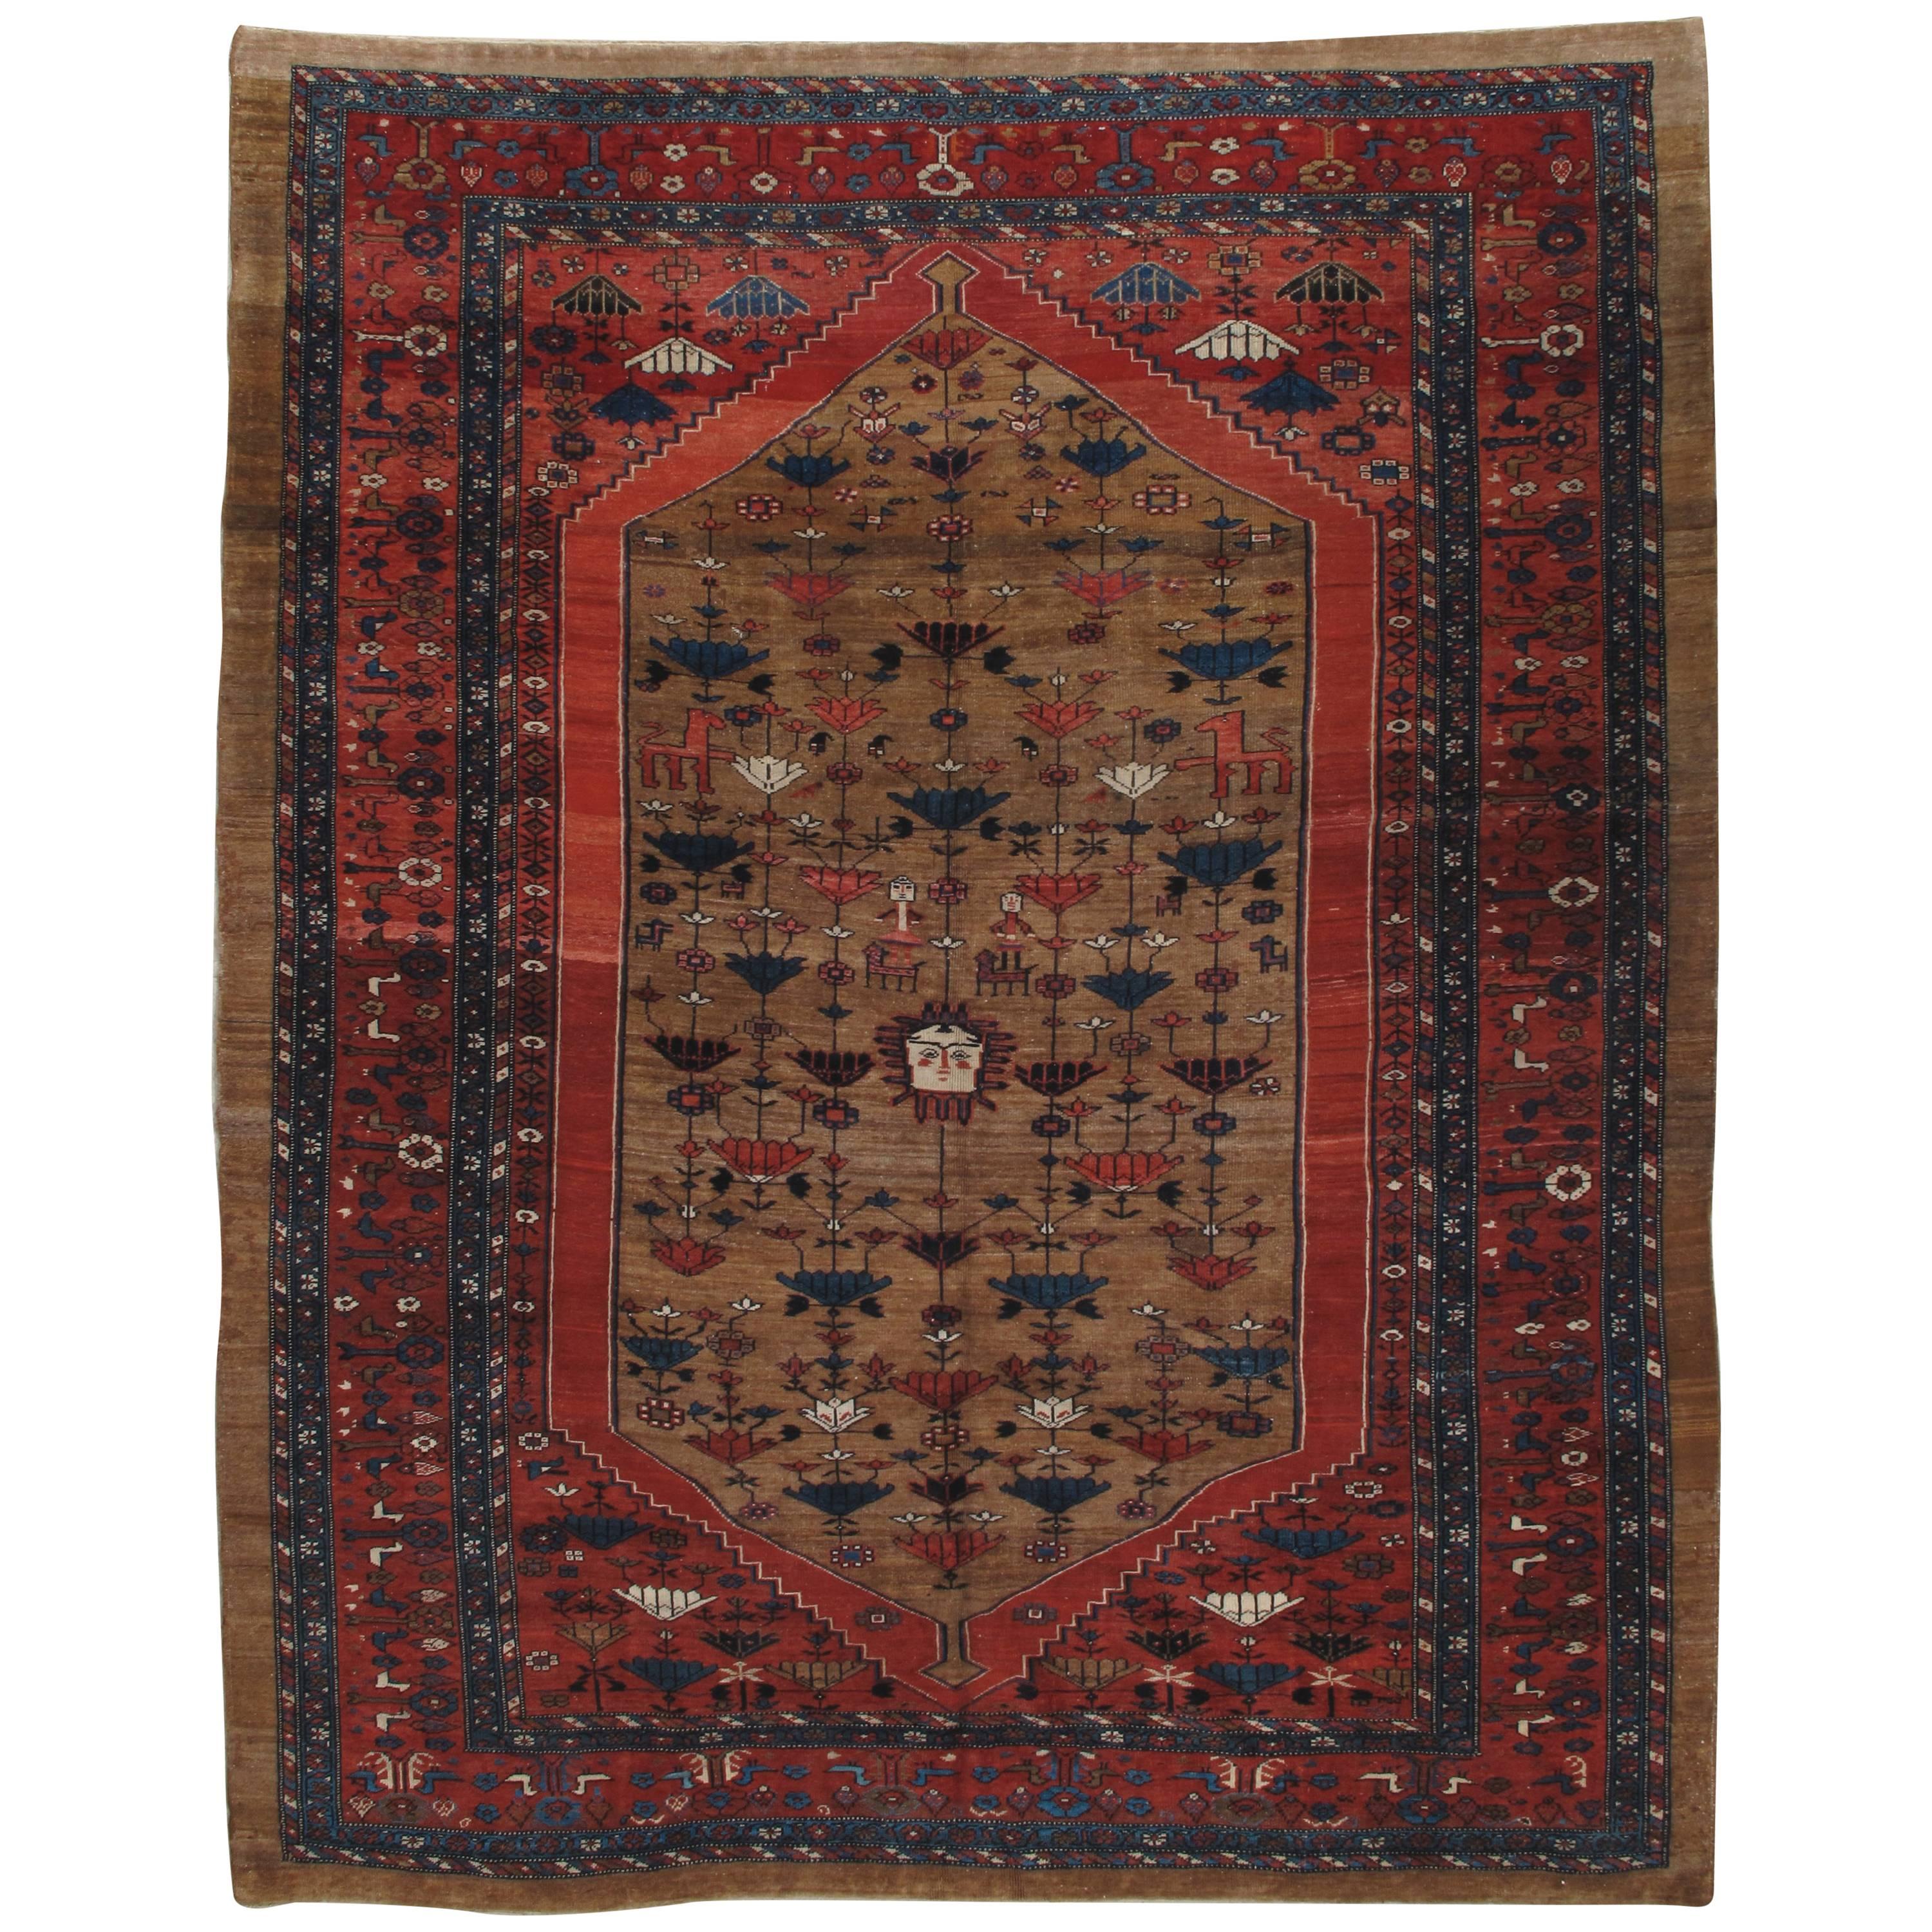 Antique Bakshaish Carpet, Oriental Persian Handmade in Brown, Blue and Red